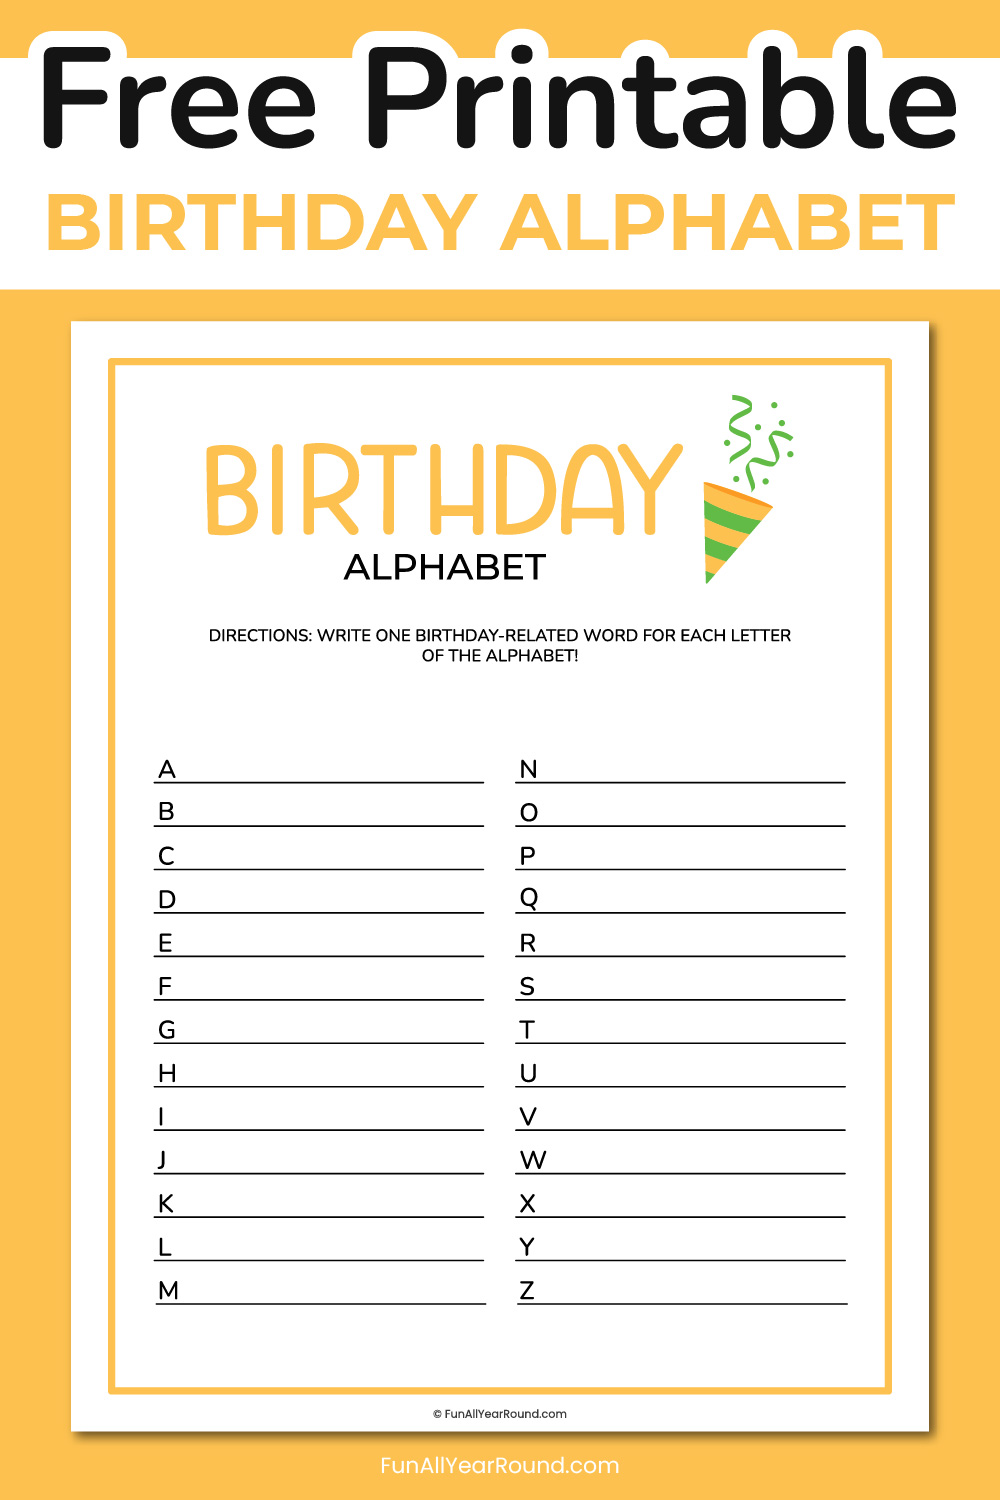 Printable birthday alphabet game